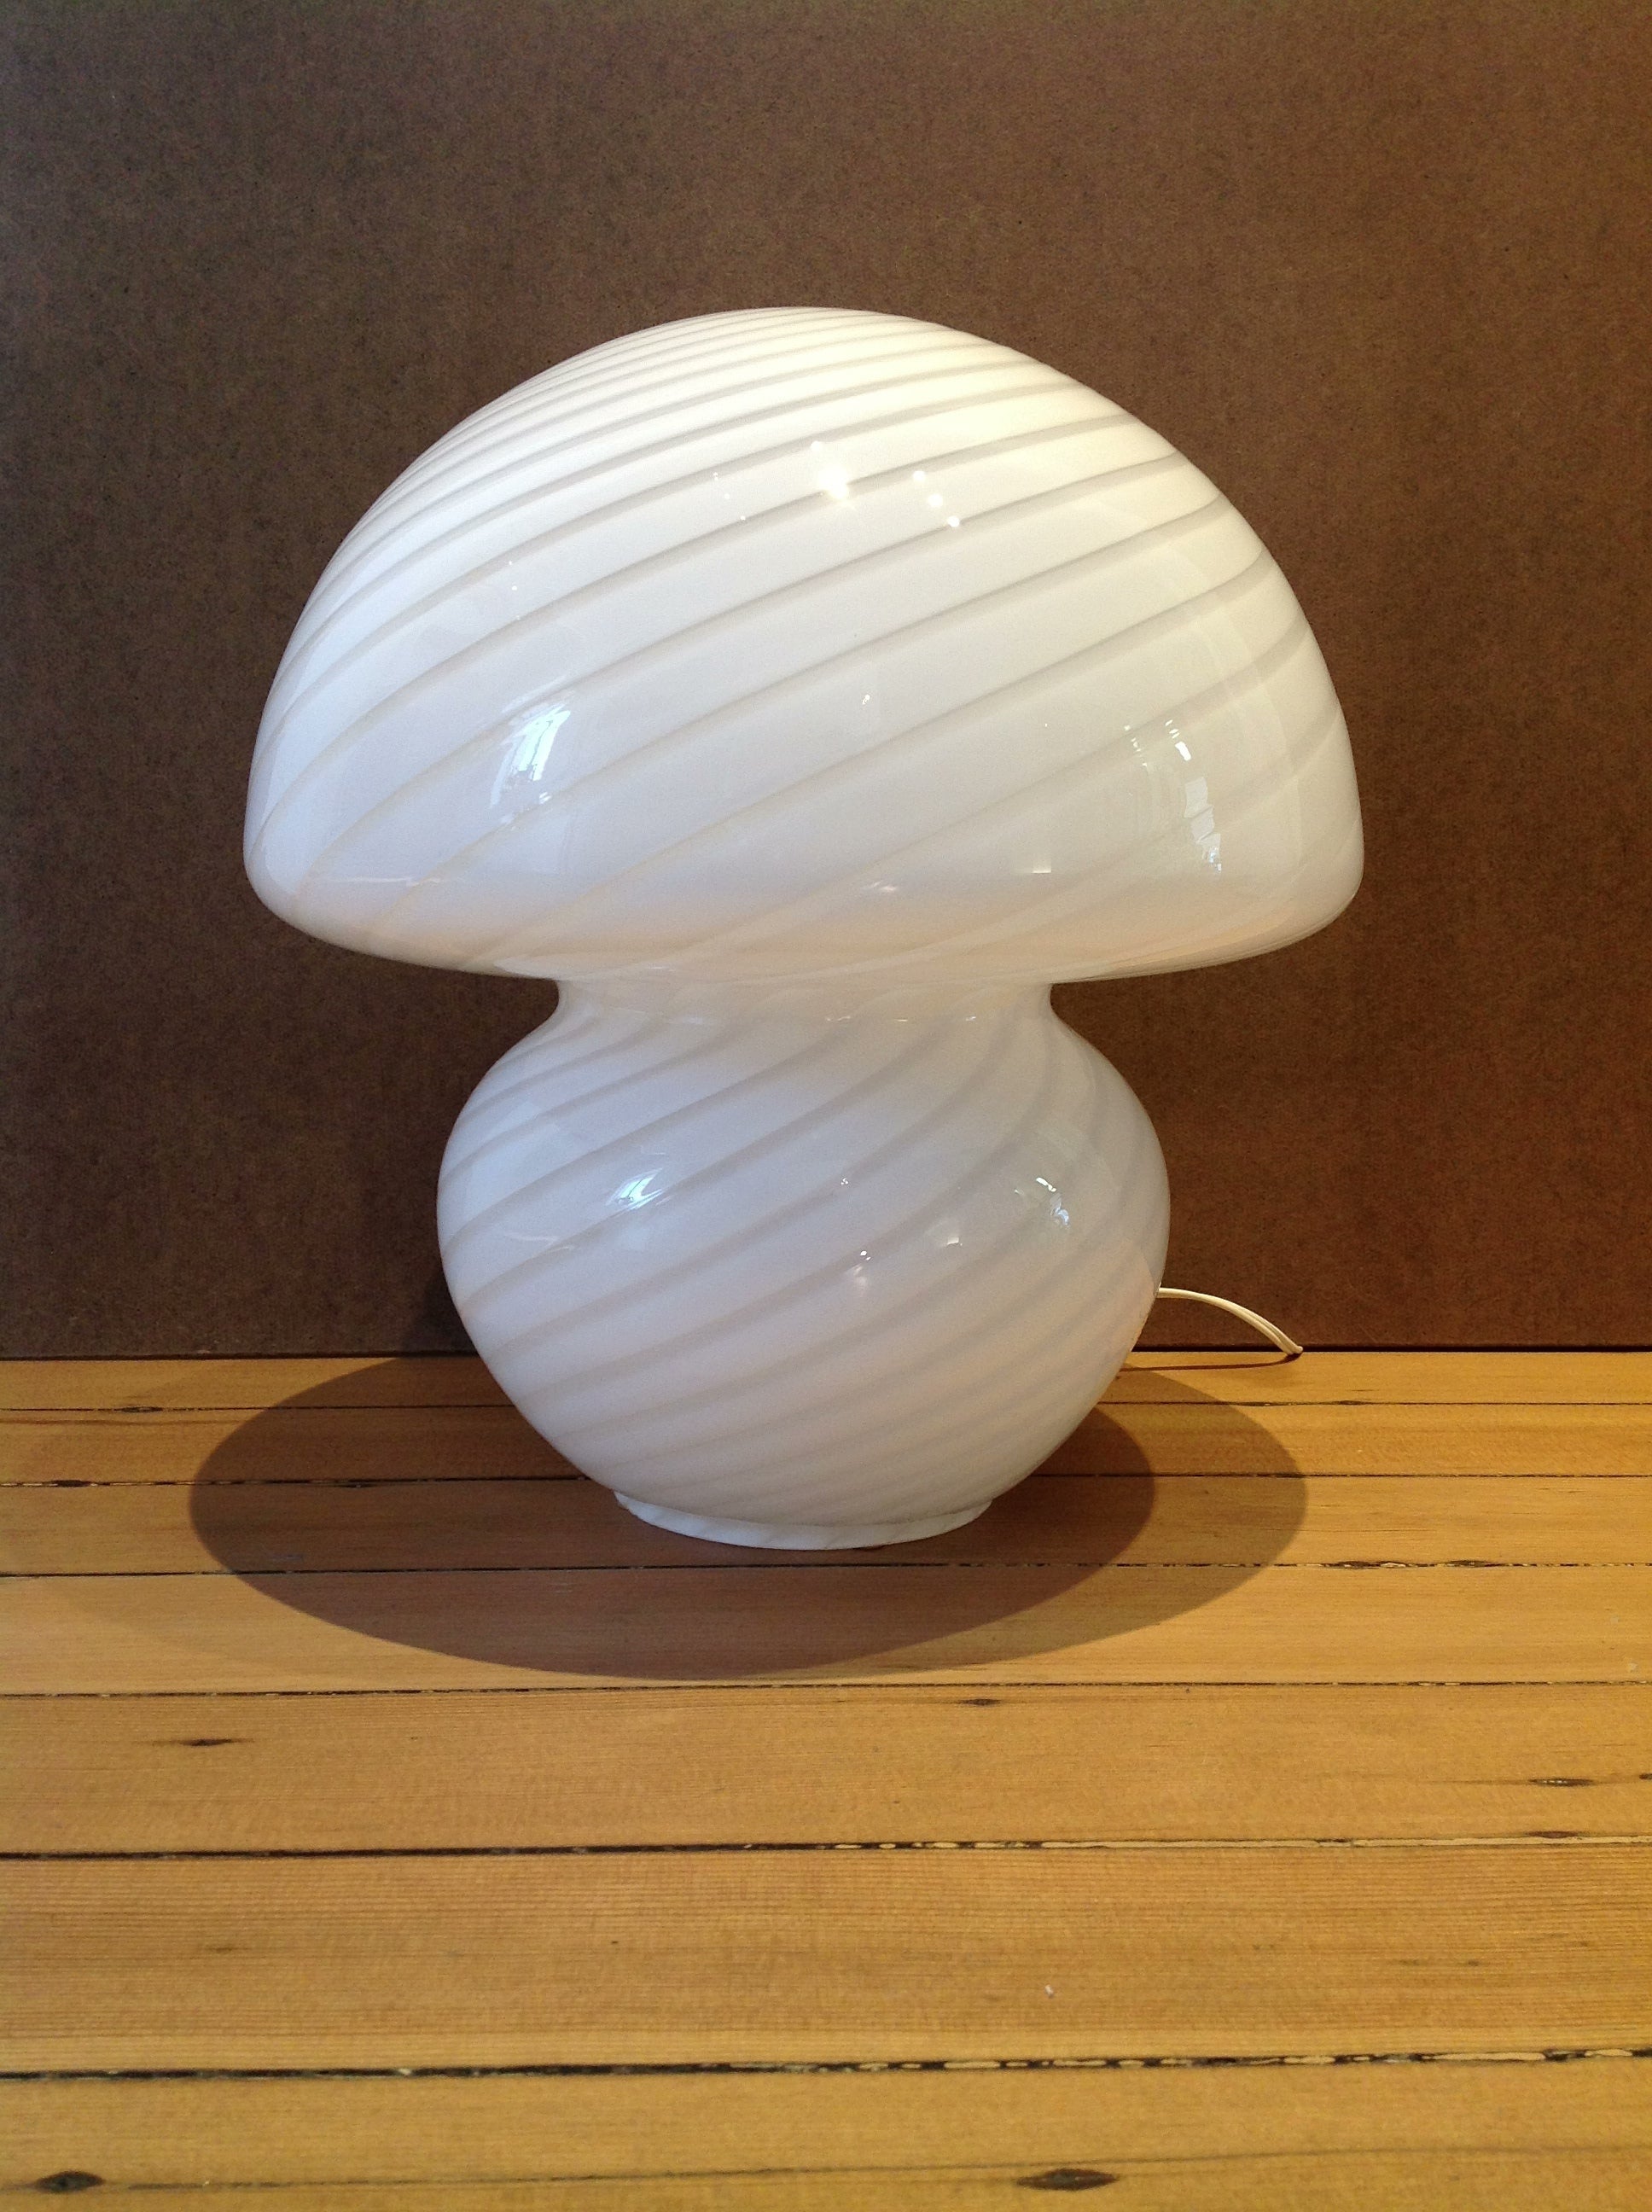 Murano Mushroom Table Lamp By Vistosi